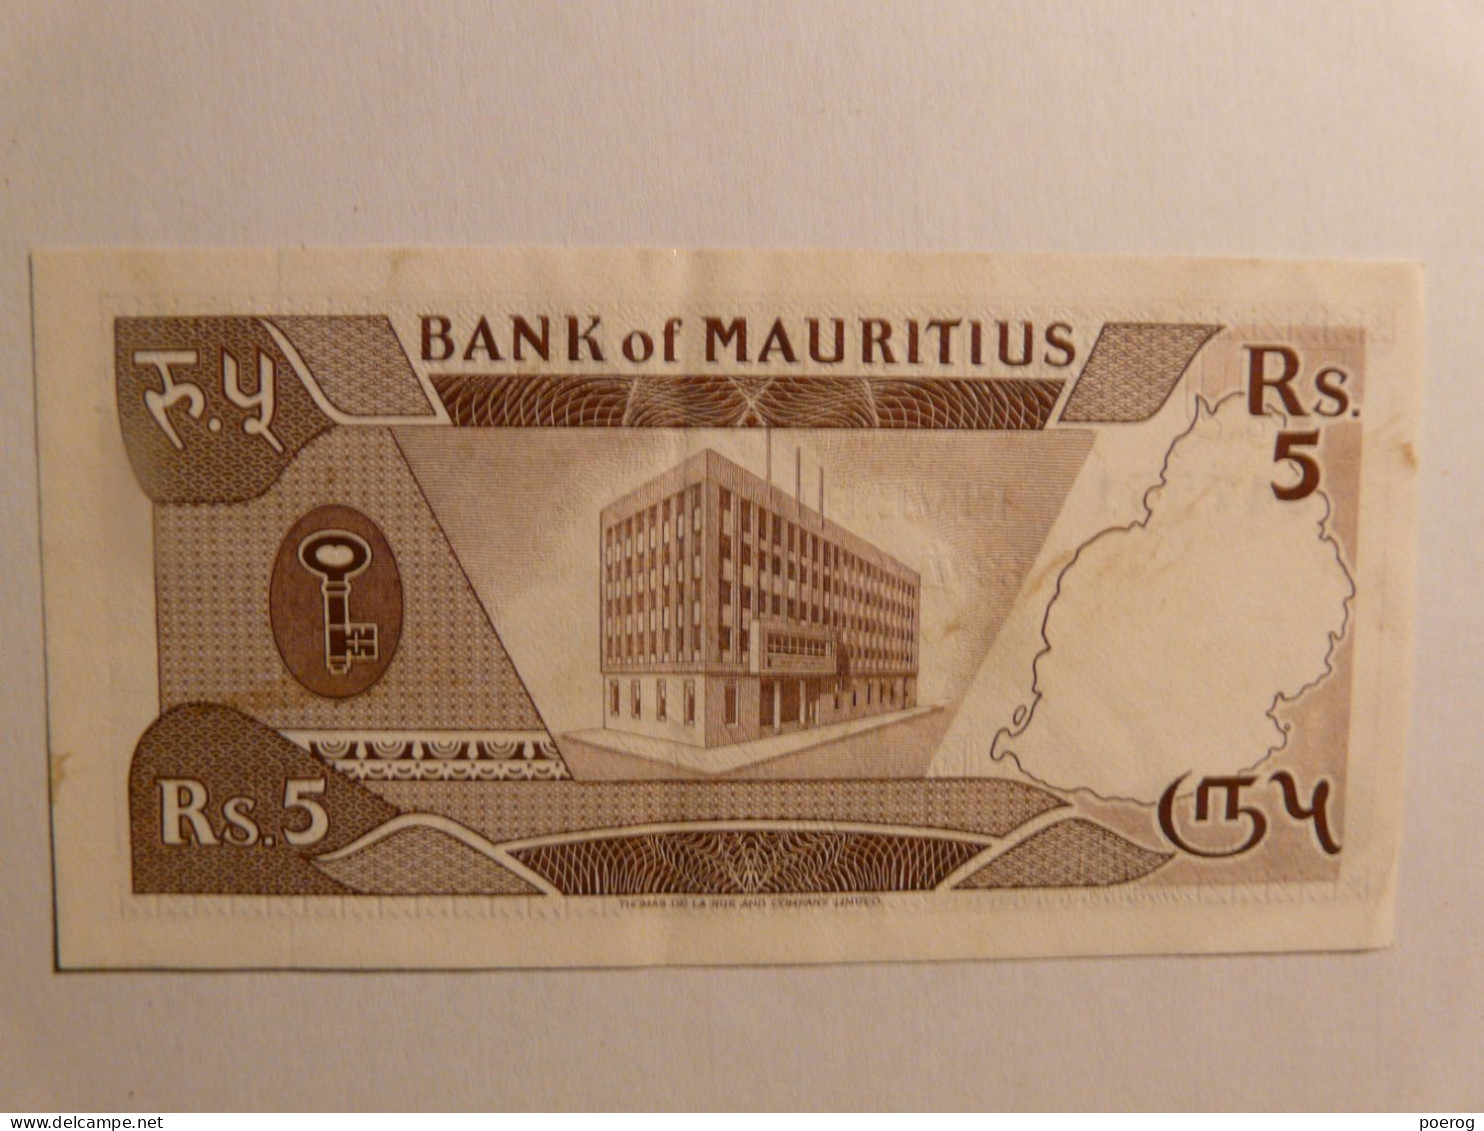 BILLET ILE MAURICE MAURITIUS - 5 RUPEES CIRCA 1990 - BILLET DE BANQUE - A/I 347551 - 5 ROUPIES - Bank Note - Mauricio